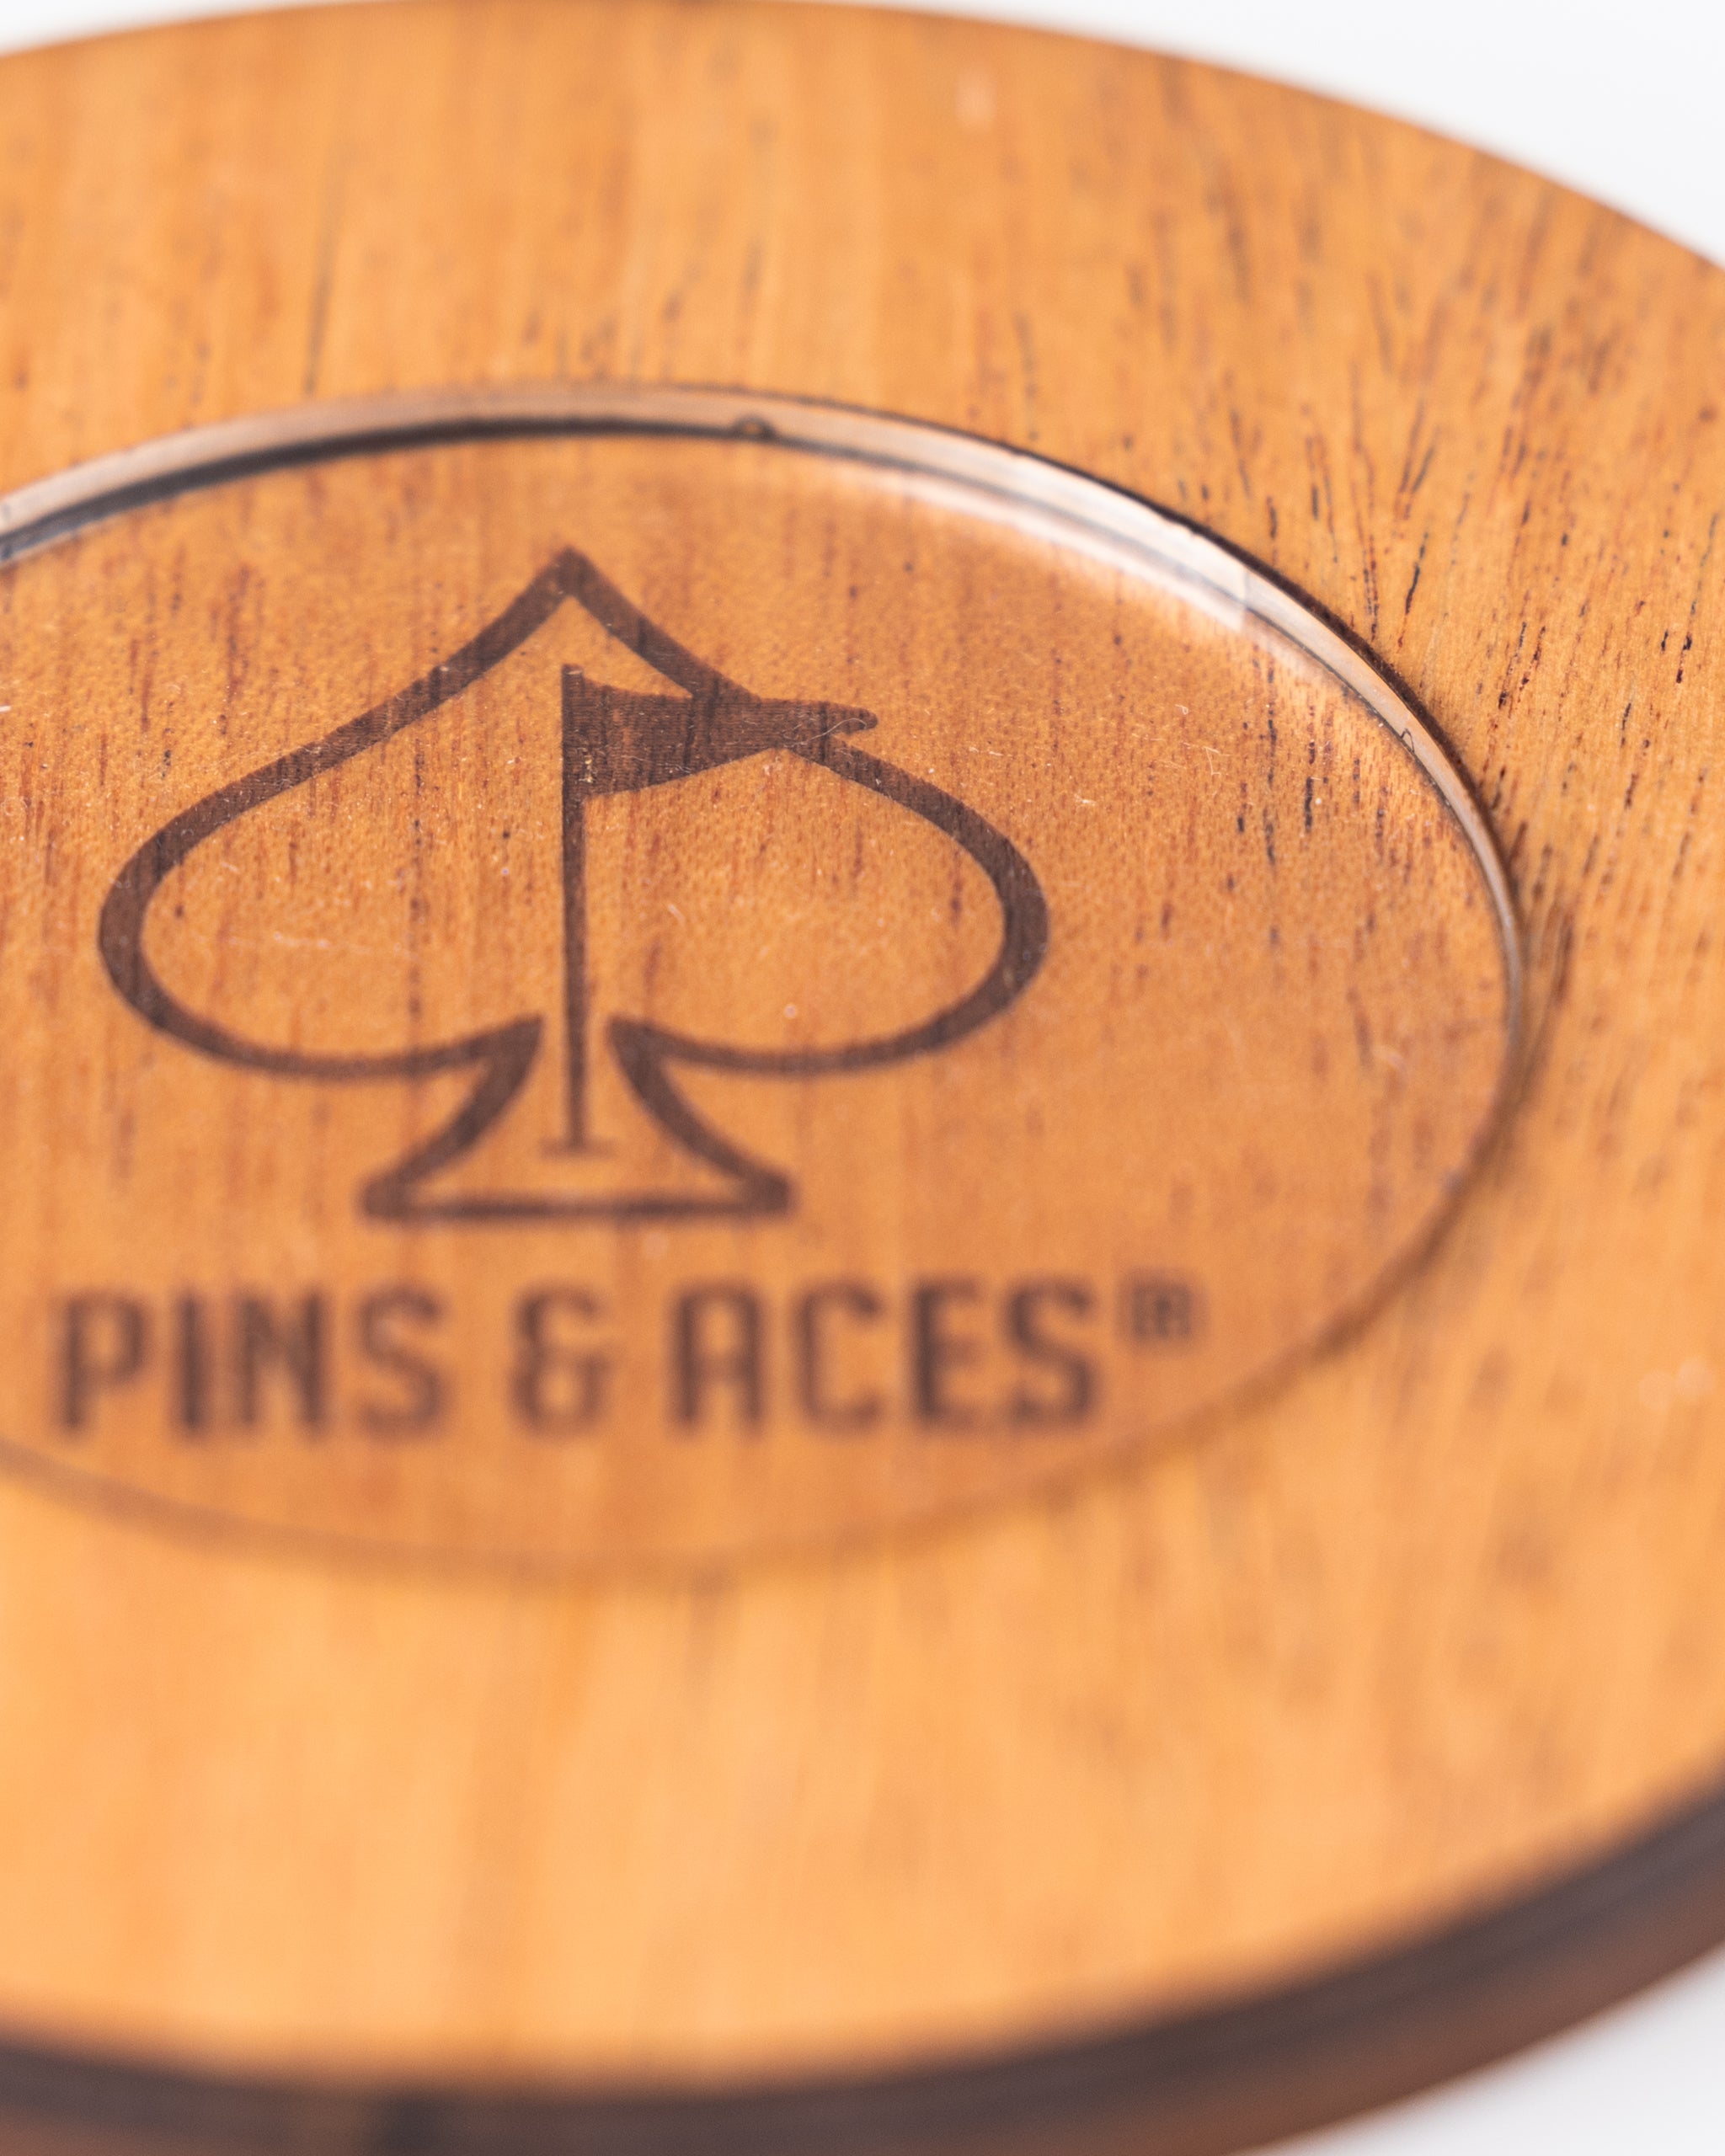 Pins & Aces Coaster Set